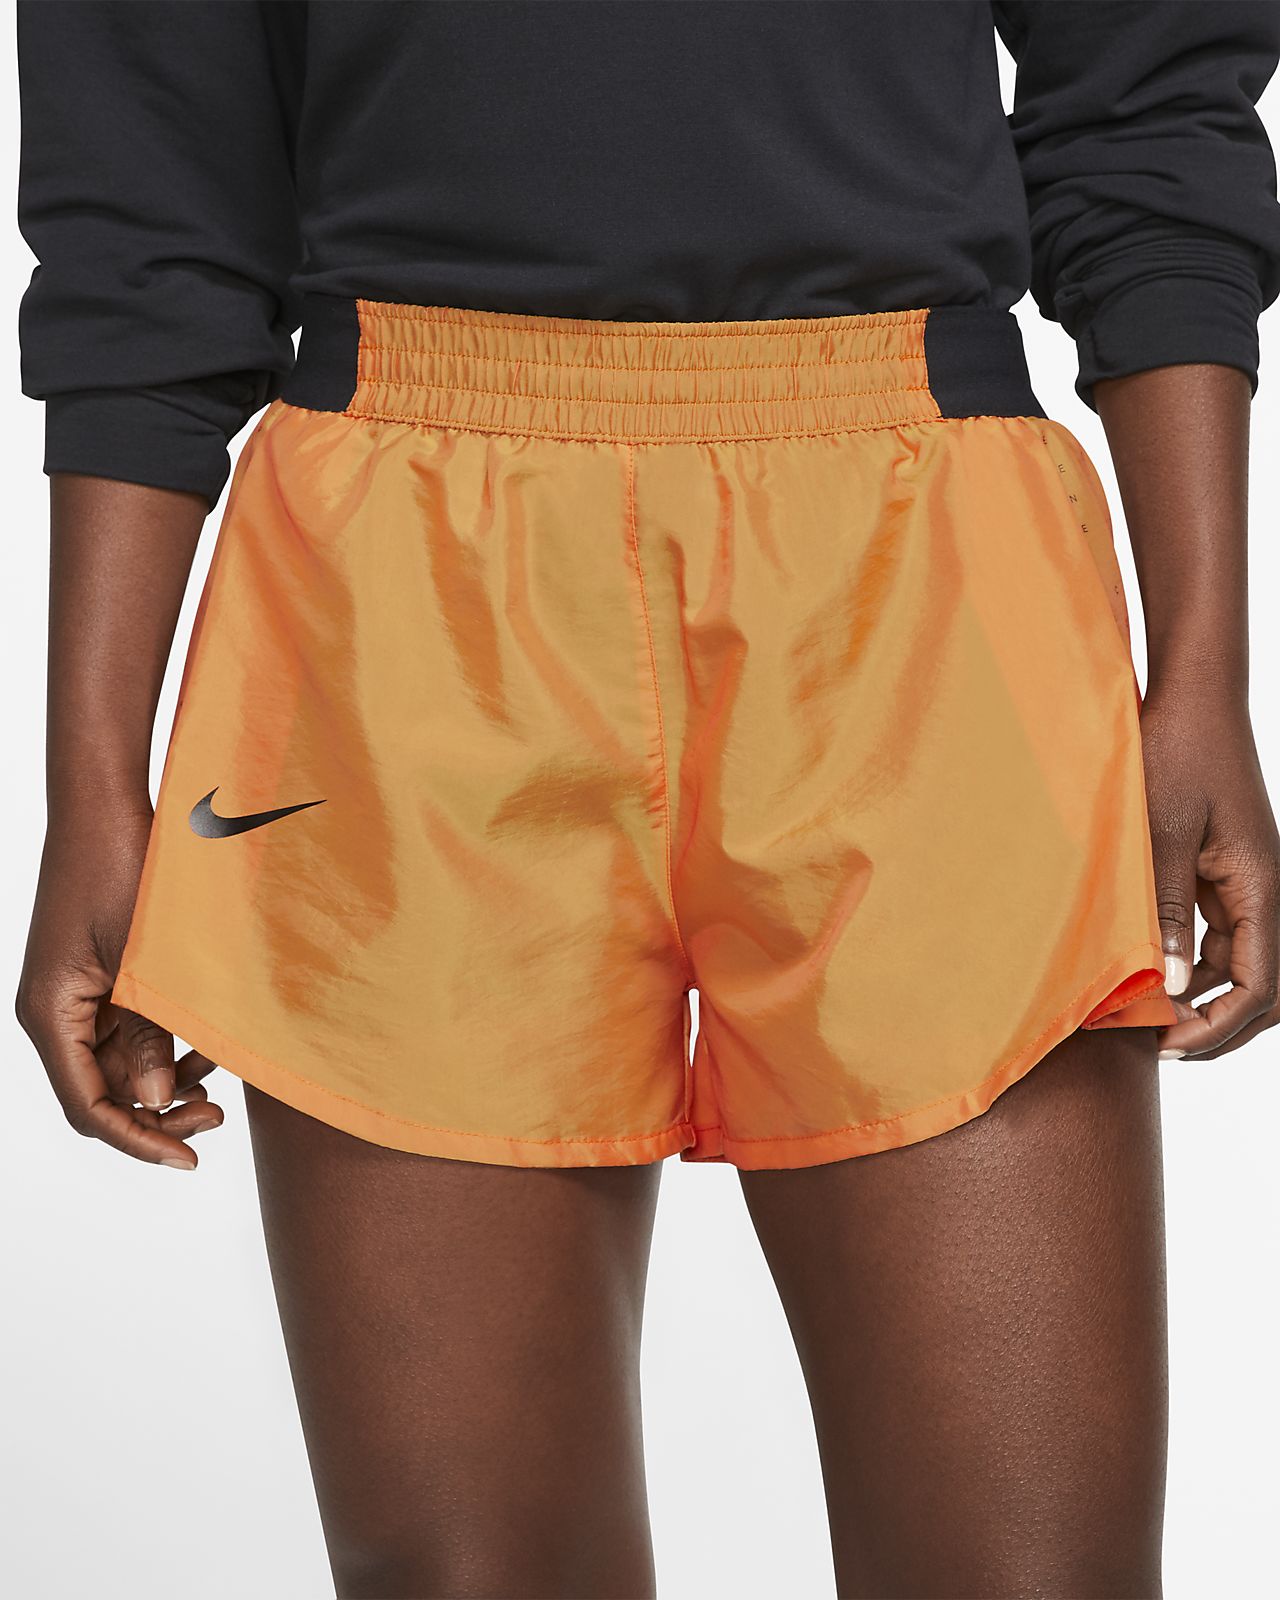 nike women's dry tempo shorts orange